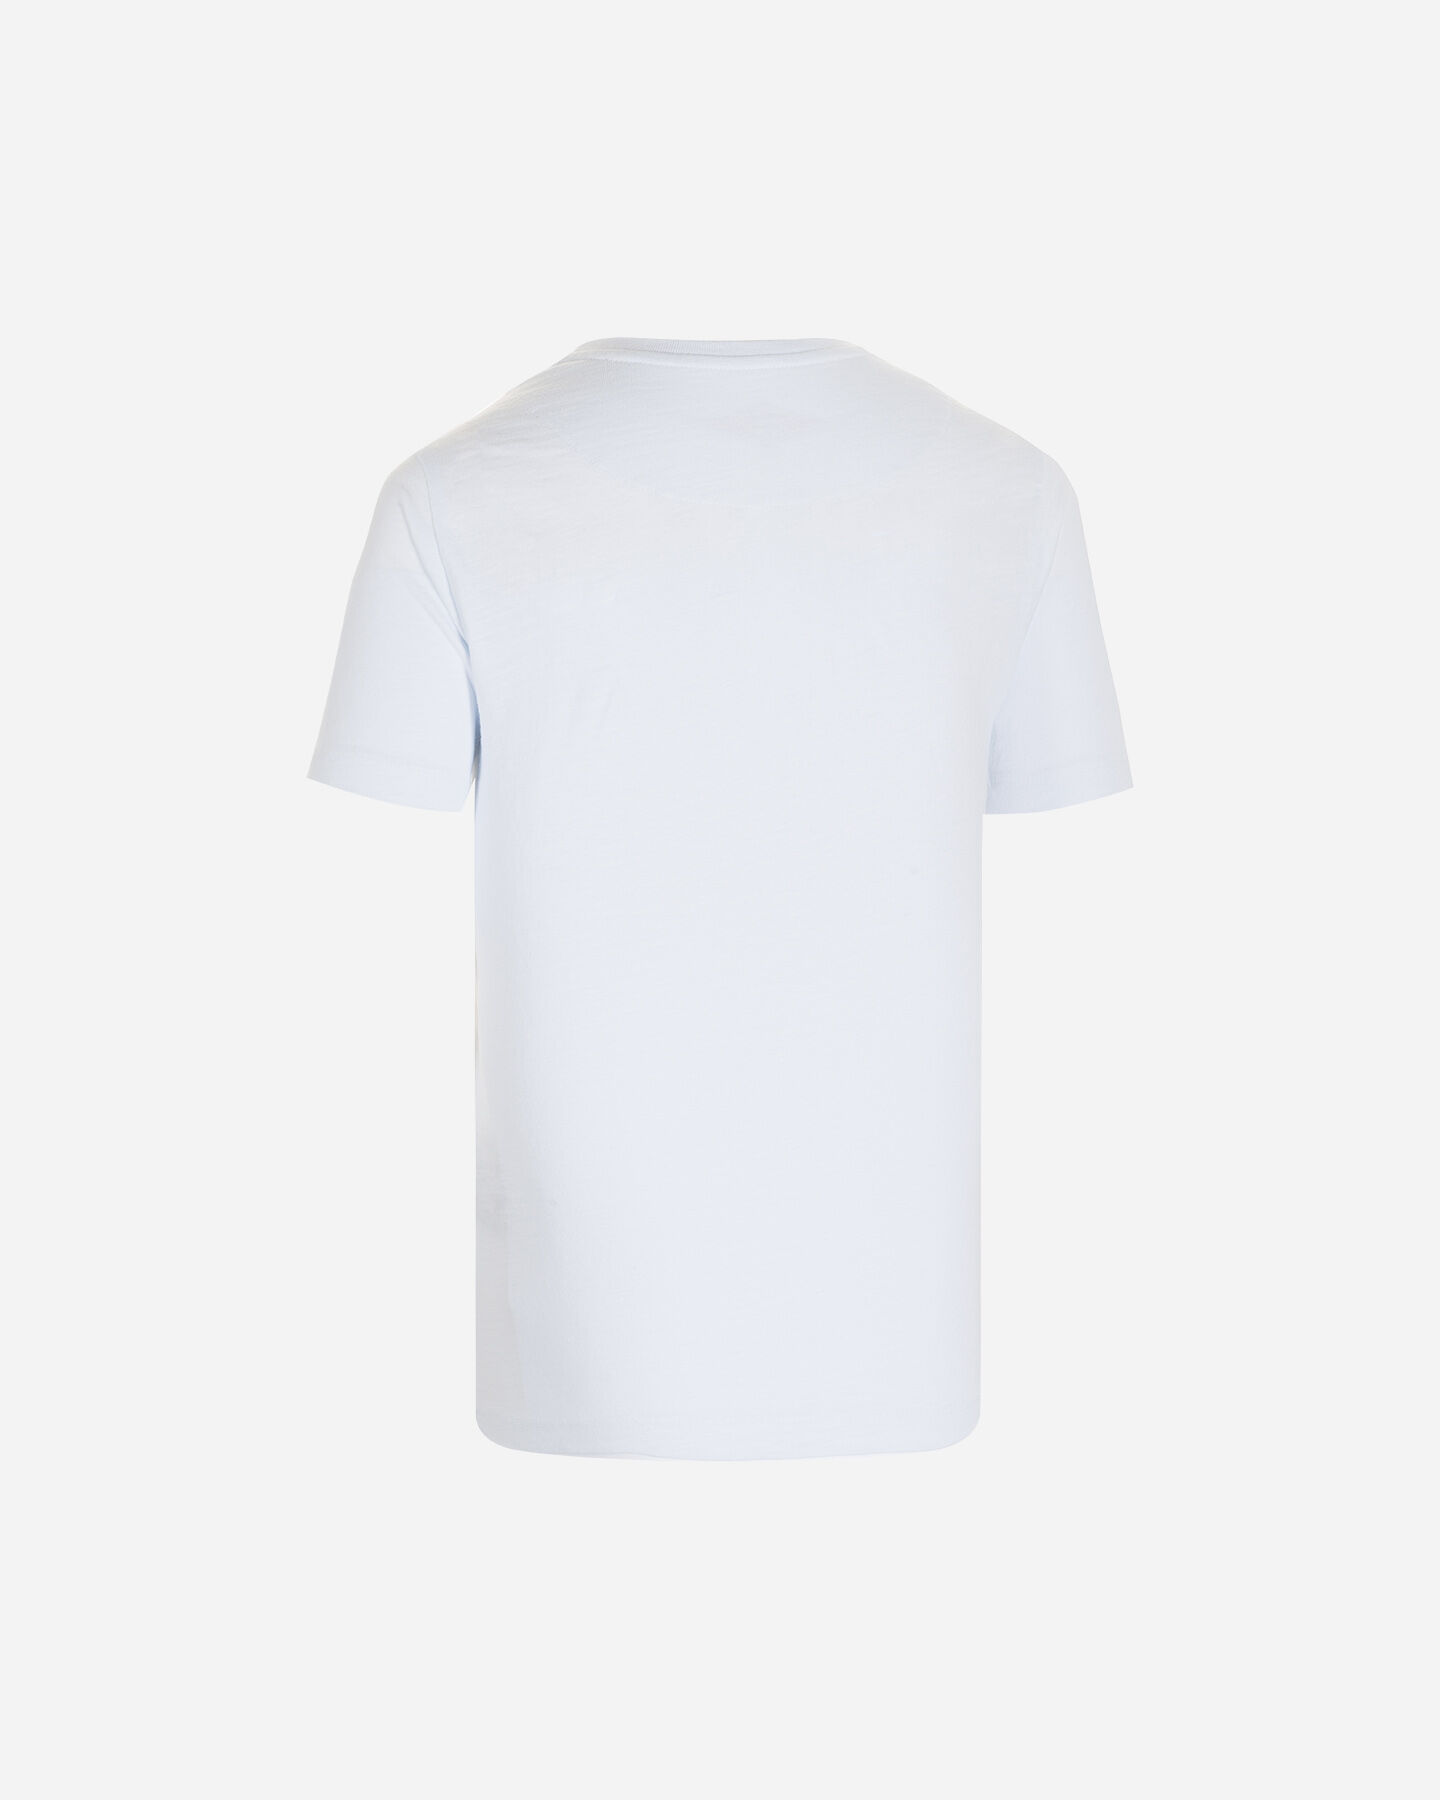  T-Shirt BEAR LOGO JR S4101827|001A|6 scatto 1